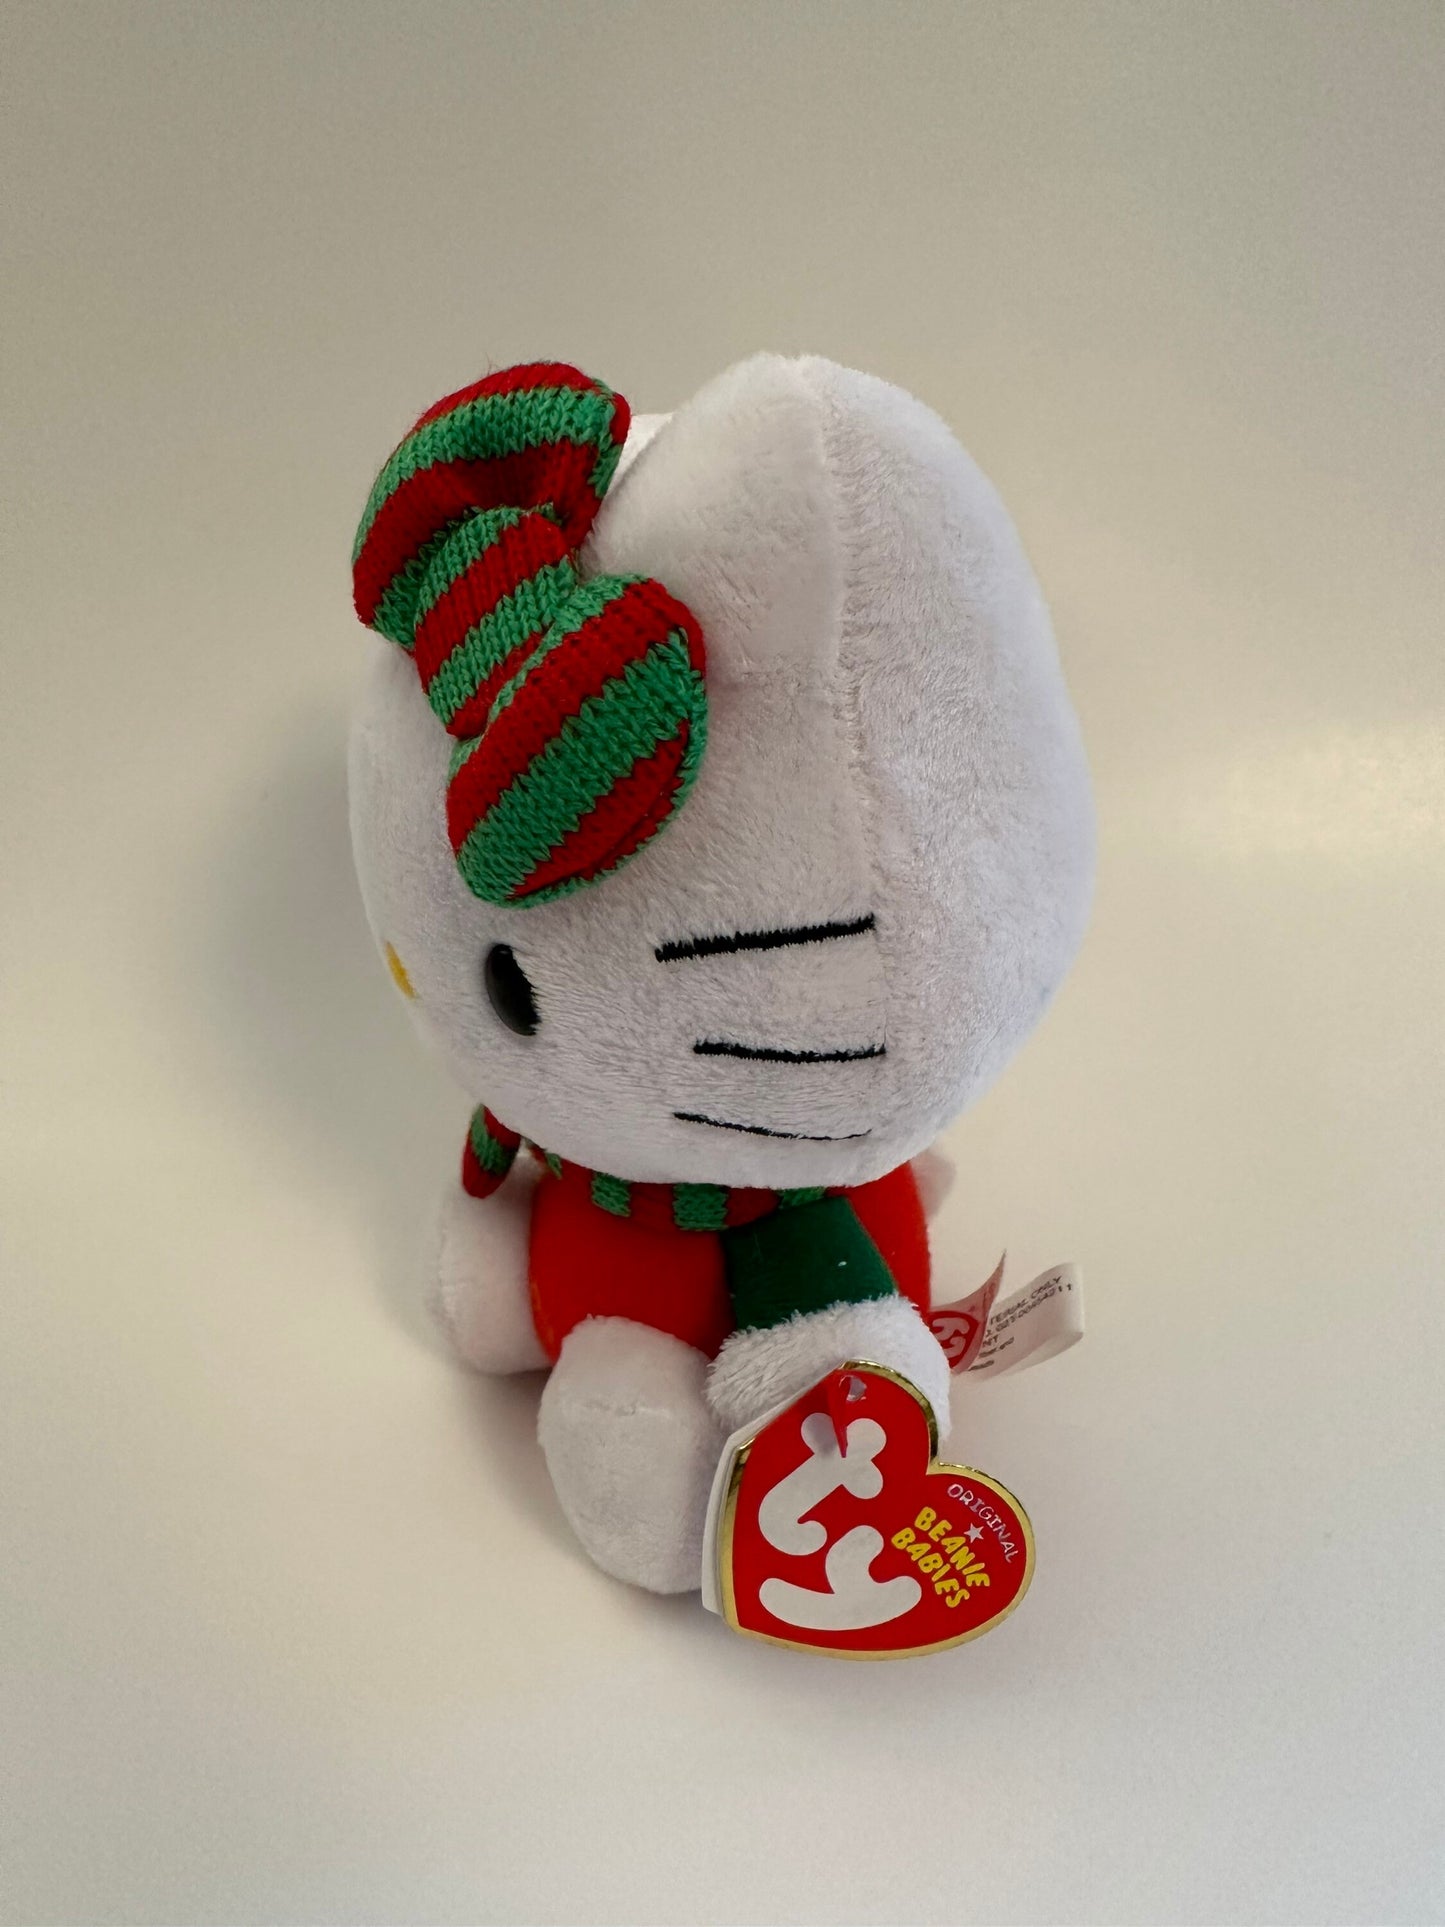 TY Beanie Baby “Hello Kitty” the Christmas Holiday Themed Hello Kitty Plush (5.5 inch)